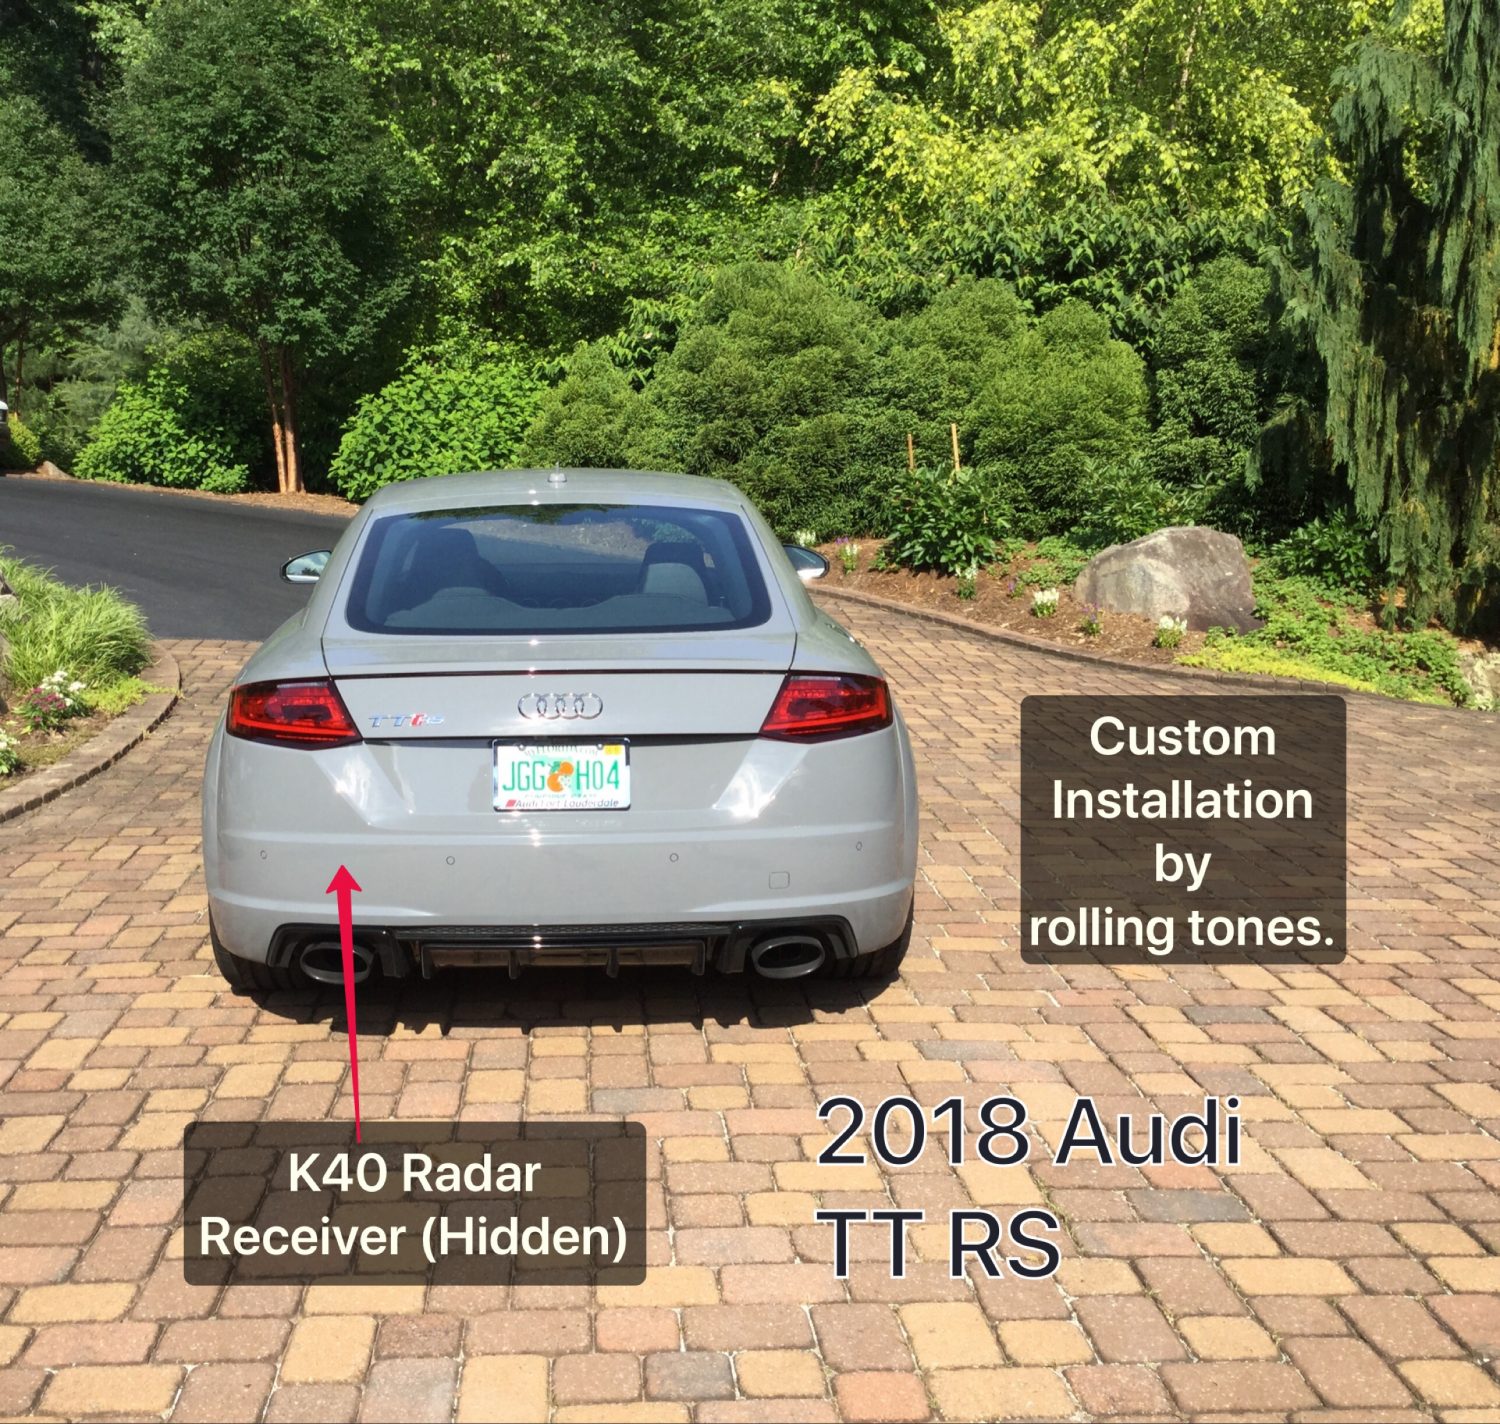 k40 radar detector on an 2018 Audi TT RS